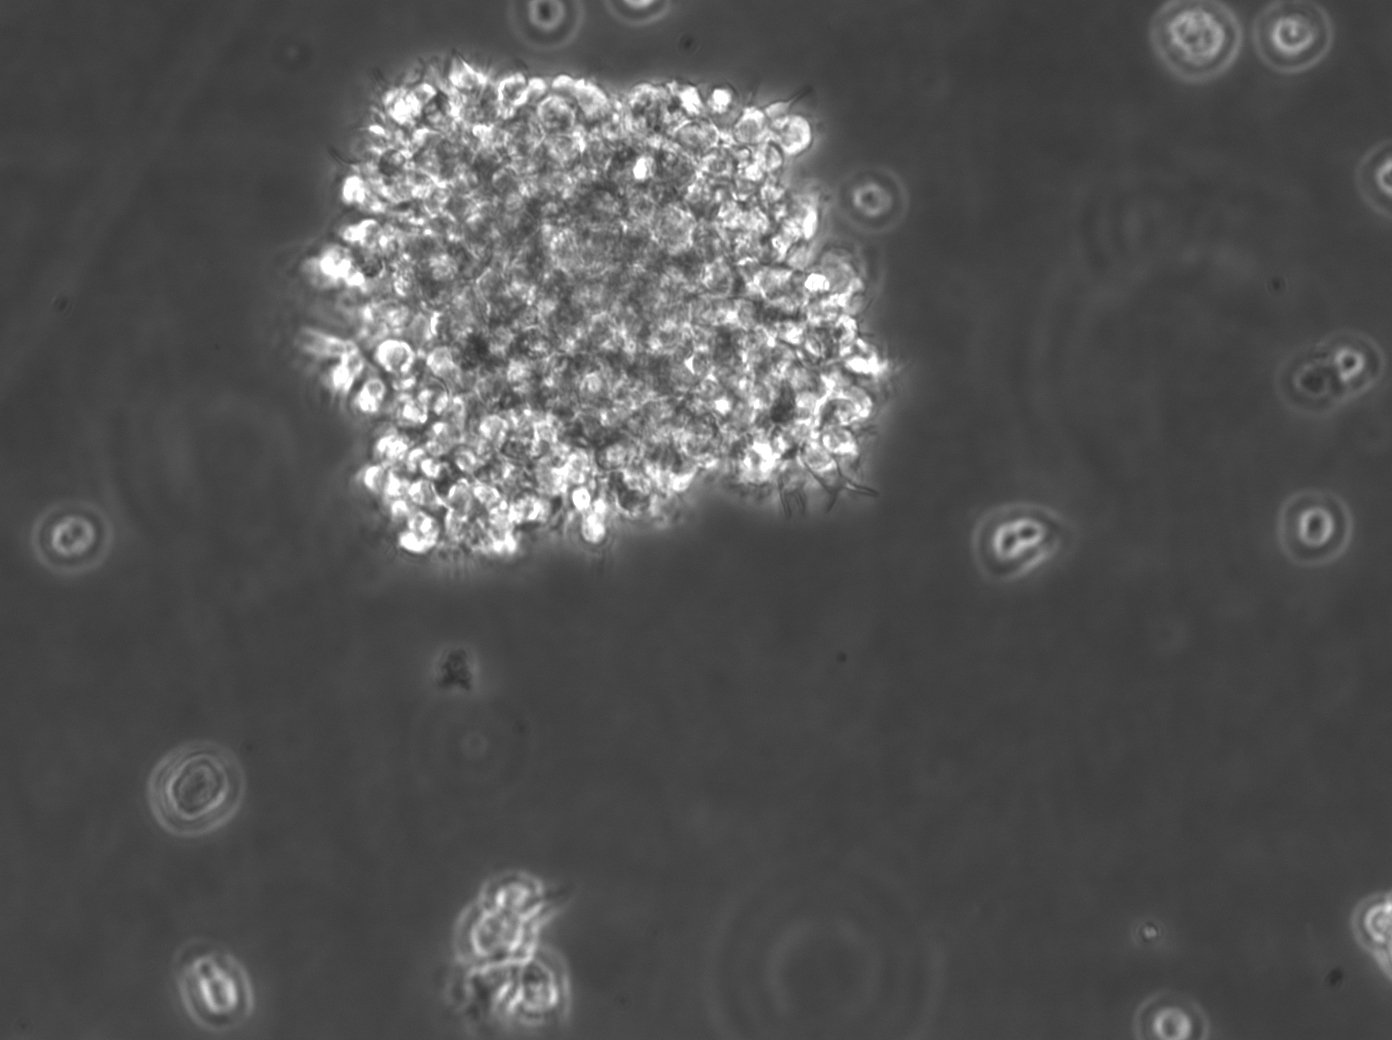 B-LCL-HROC195 Cells